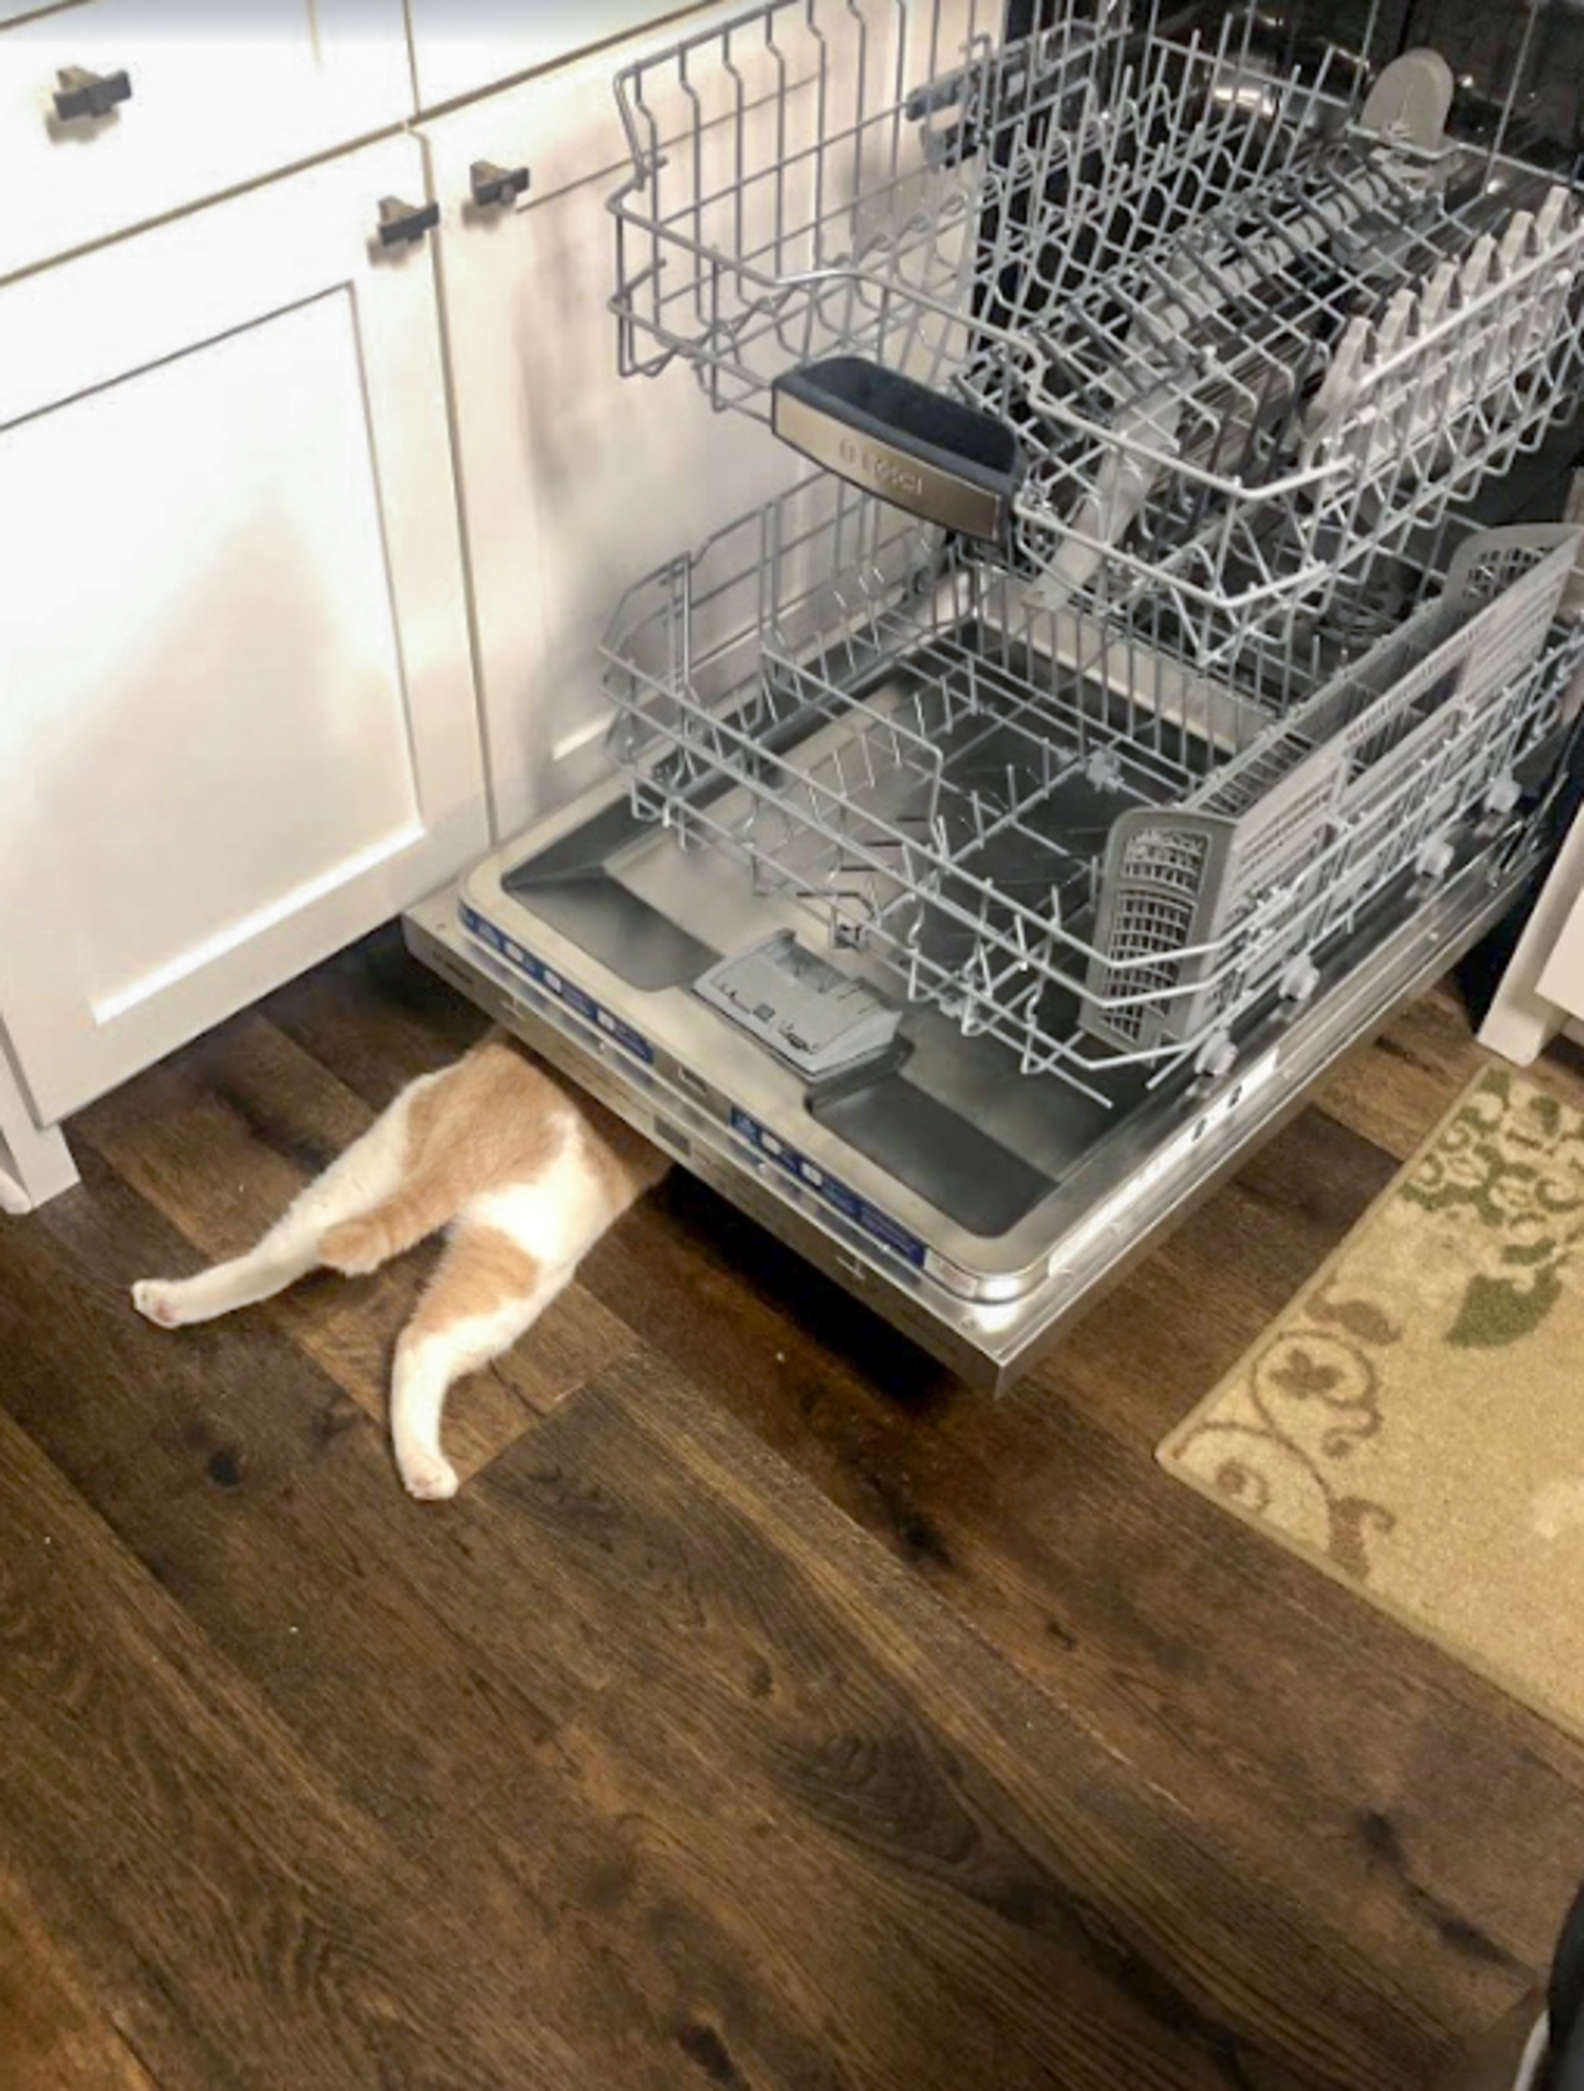 cat hiding under dishwasher